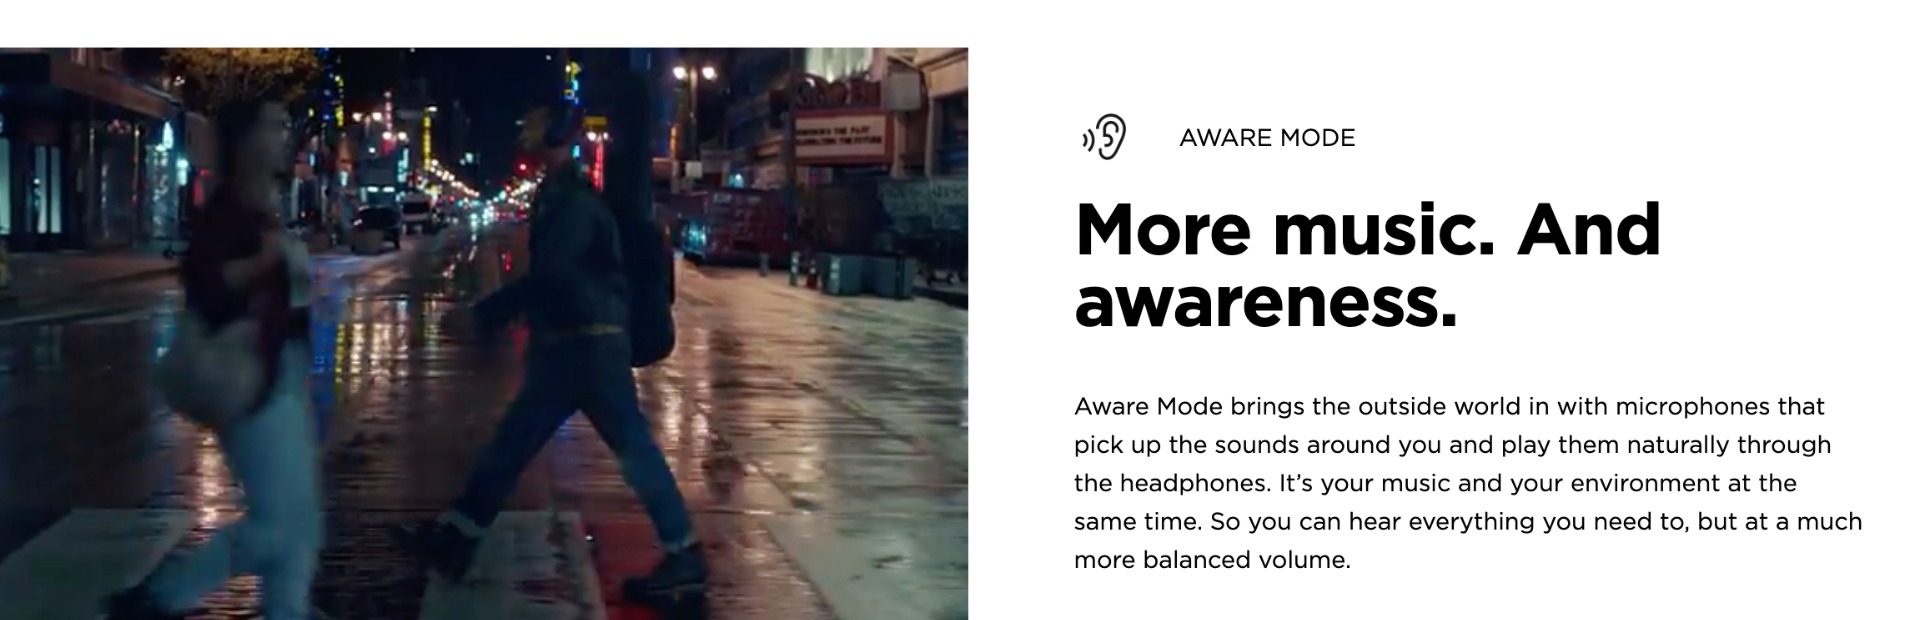 Bose QuietComfort 45,Wireless Over Ear Headphones,หูฟังไร้สาย,หูฟังบลูทูธ,หูฟังครอบหู,หูฟังตัดเสียงรบกวน,active noise cancellation,หูฟังเสียงดี